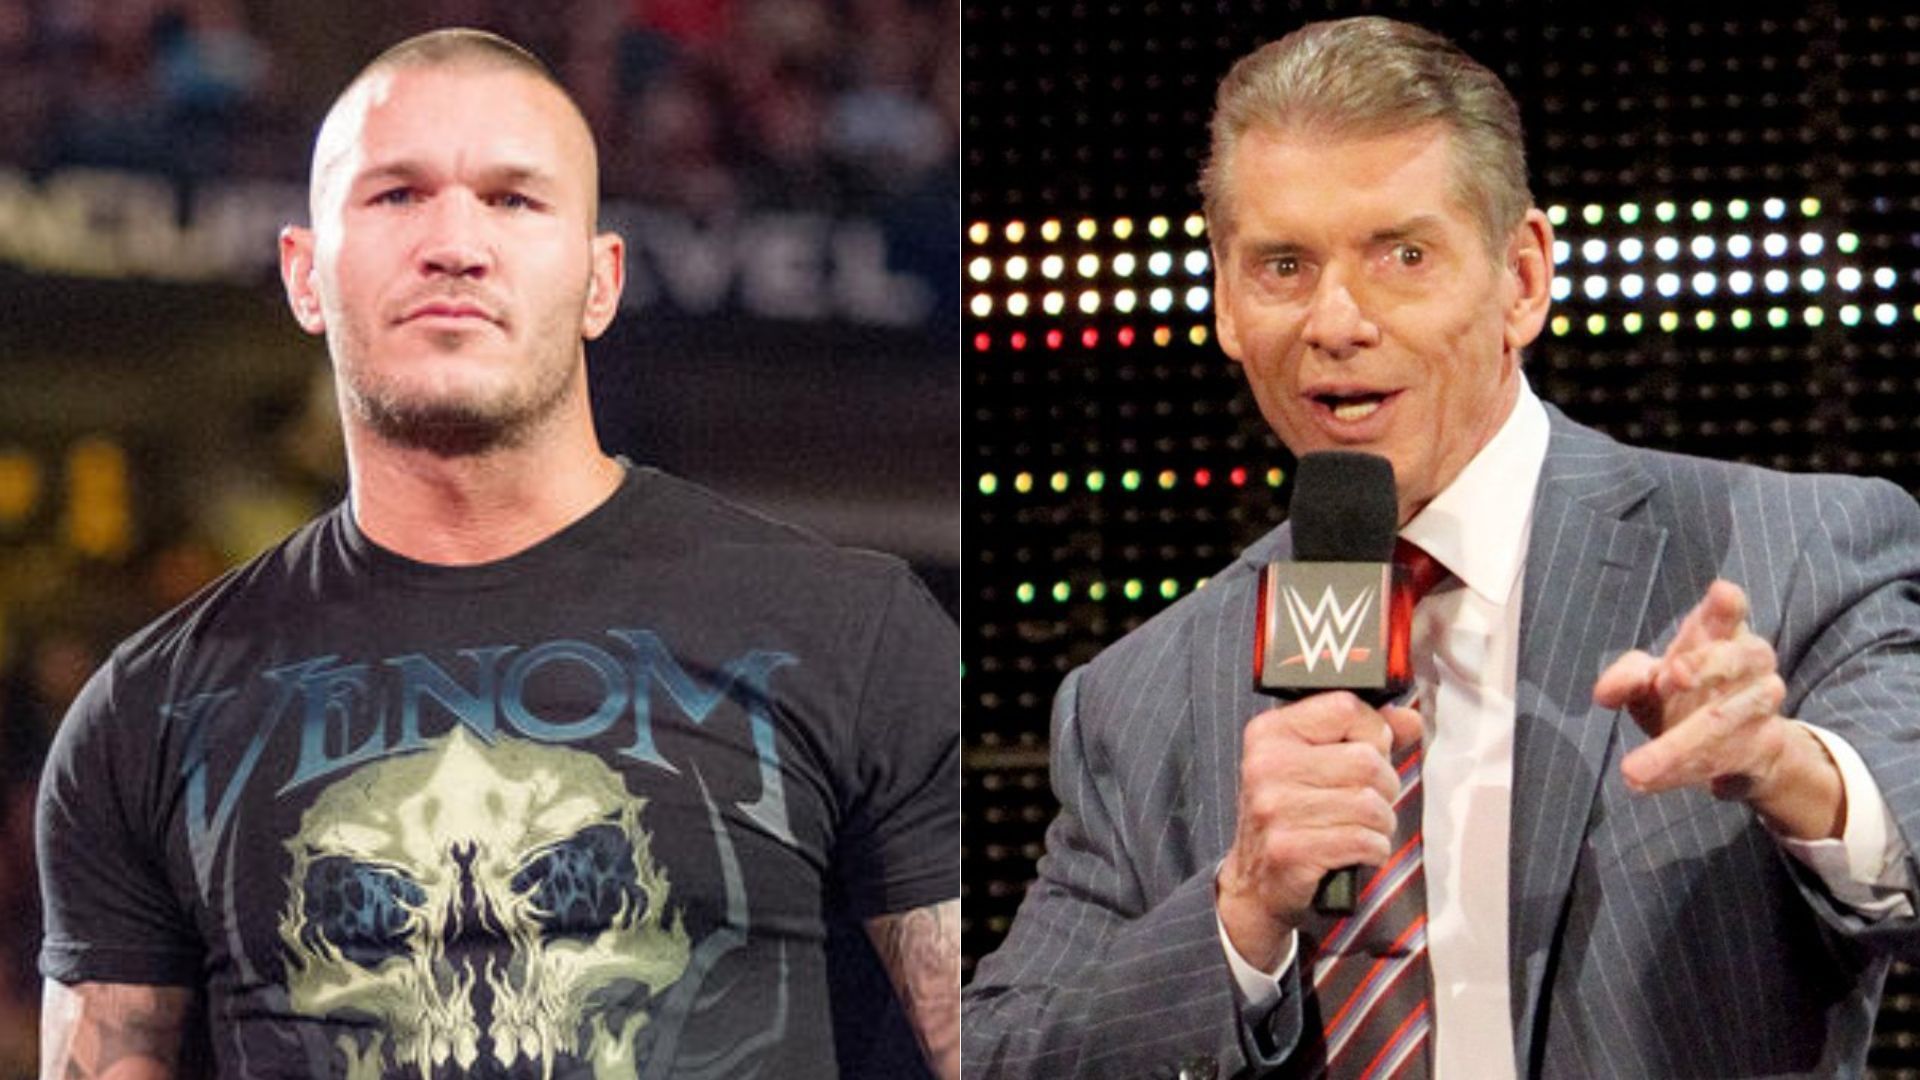 Randy Orton (left); Vince McMahon (right) [Image Credit: wwe.com]